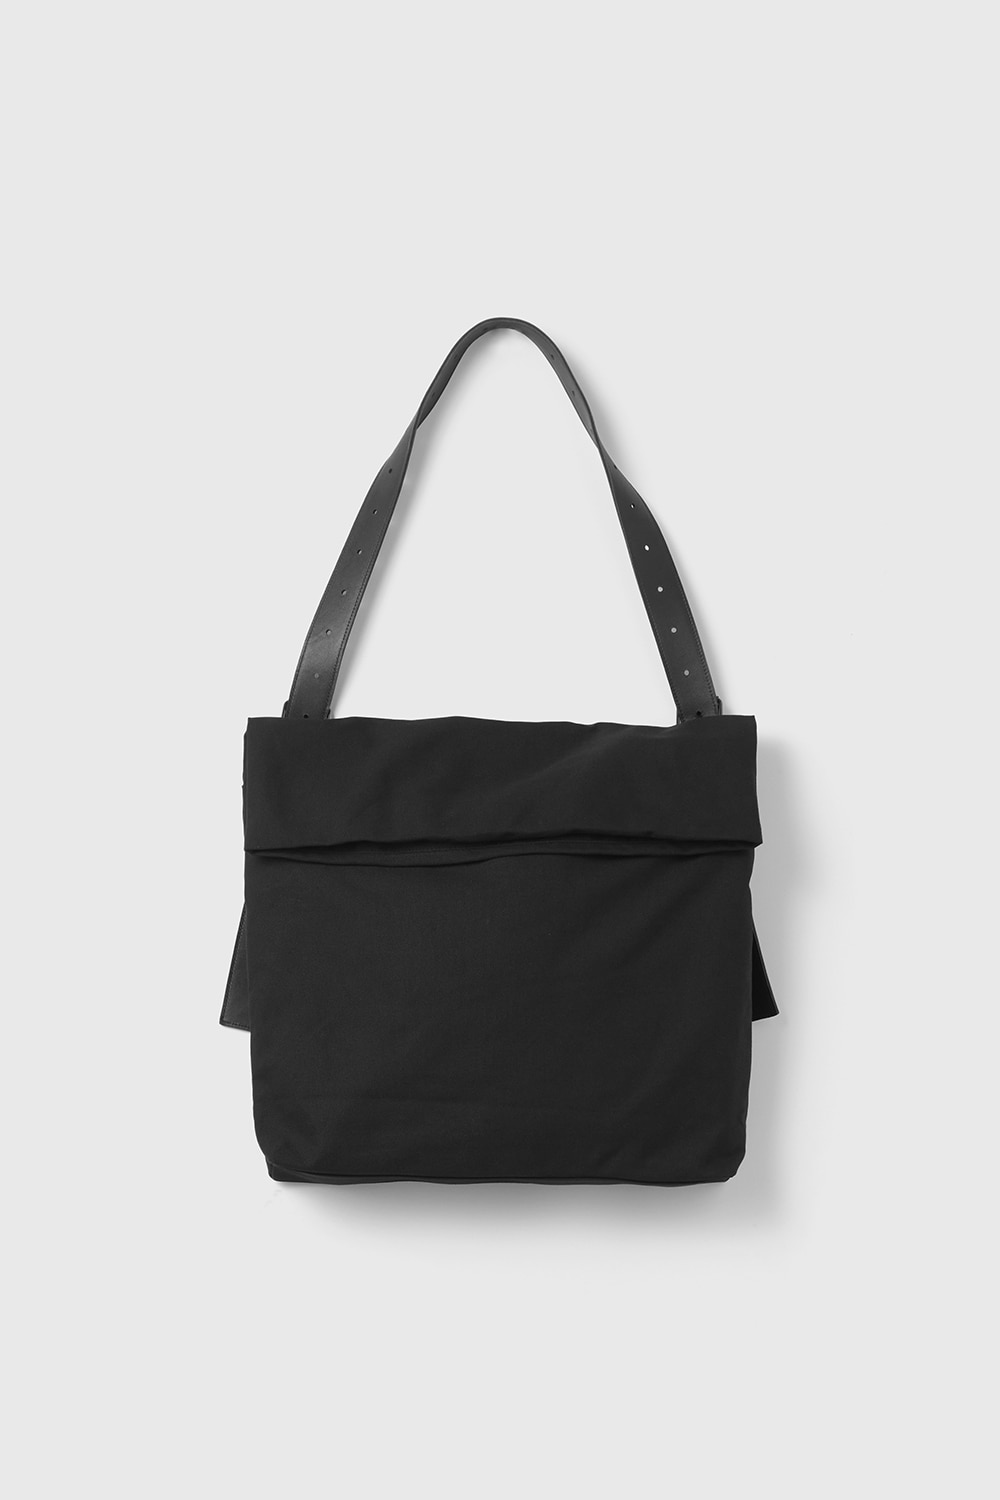 Folding Bag Black (Restock)